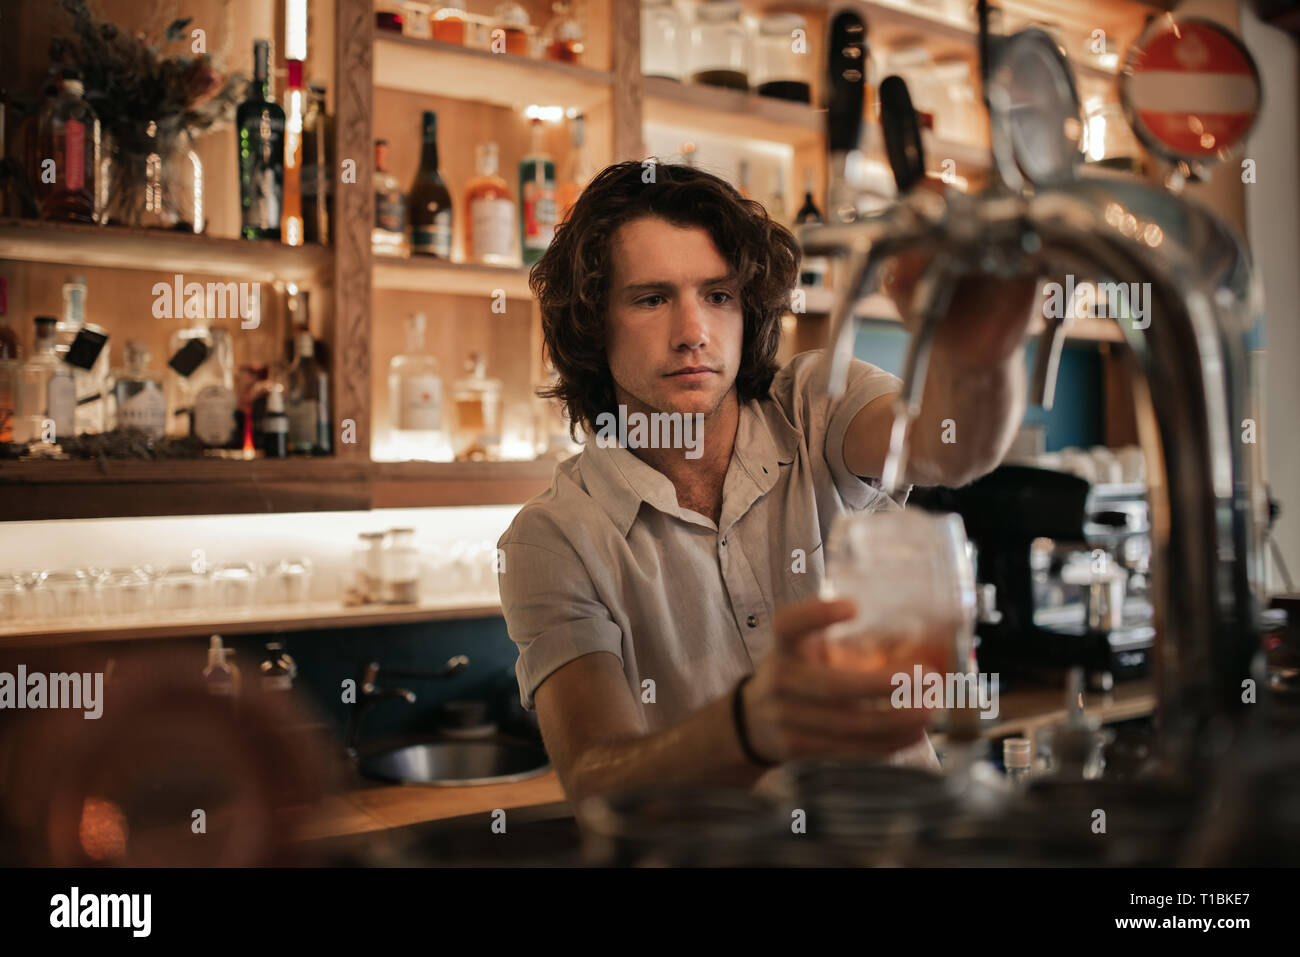 Bartender preparing drinks behind a bar counter at night Stock Photo